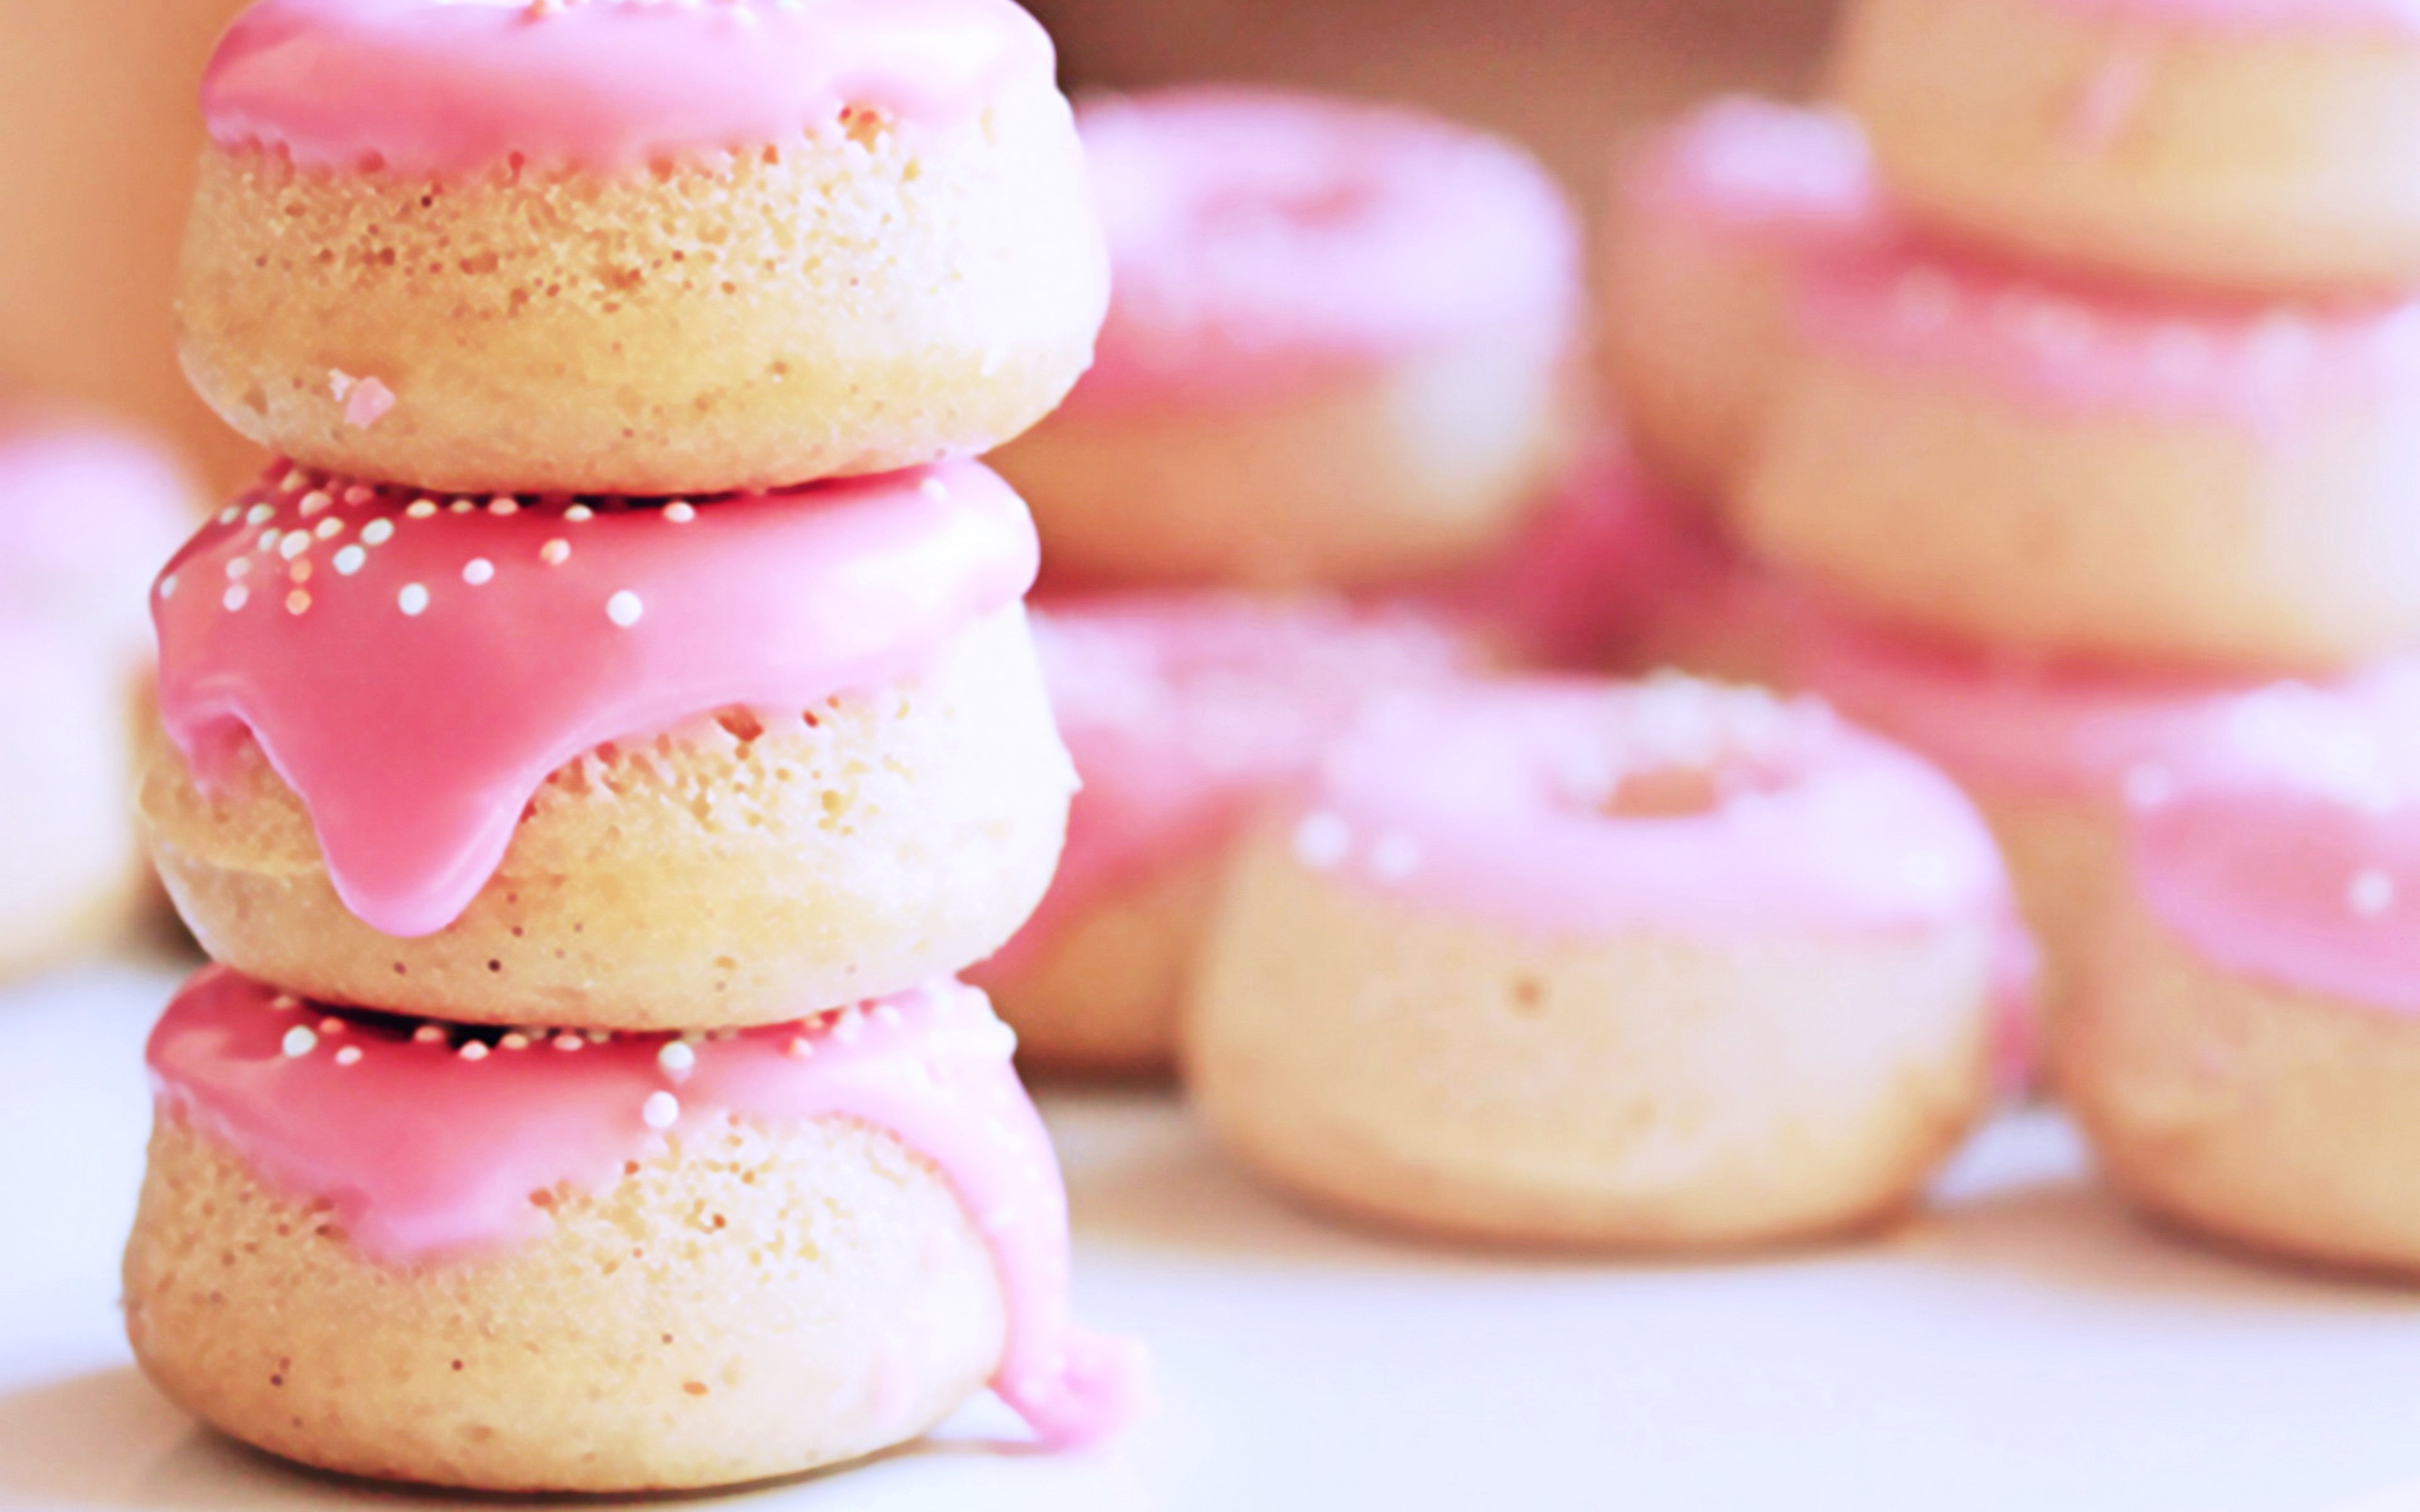 HD desktop wallpaper: Food, Pink, Sweets, Doughnut download free picture  #687859